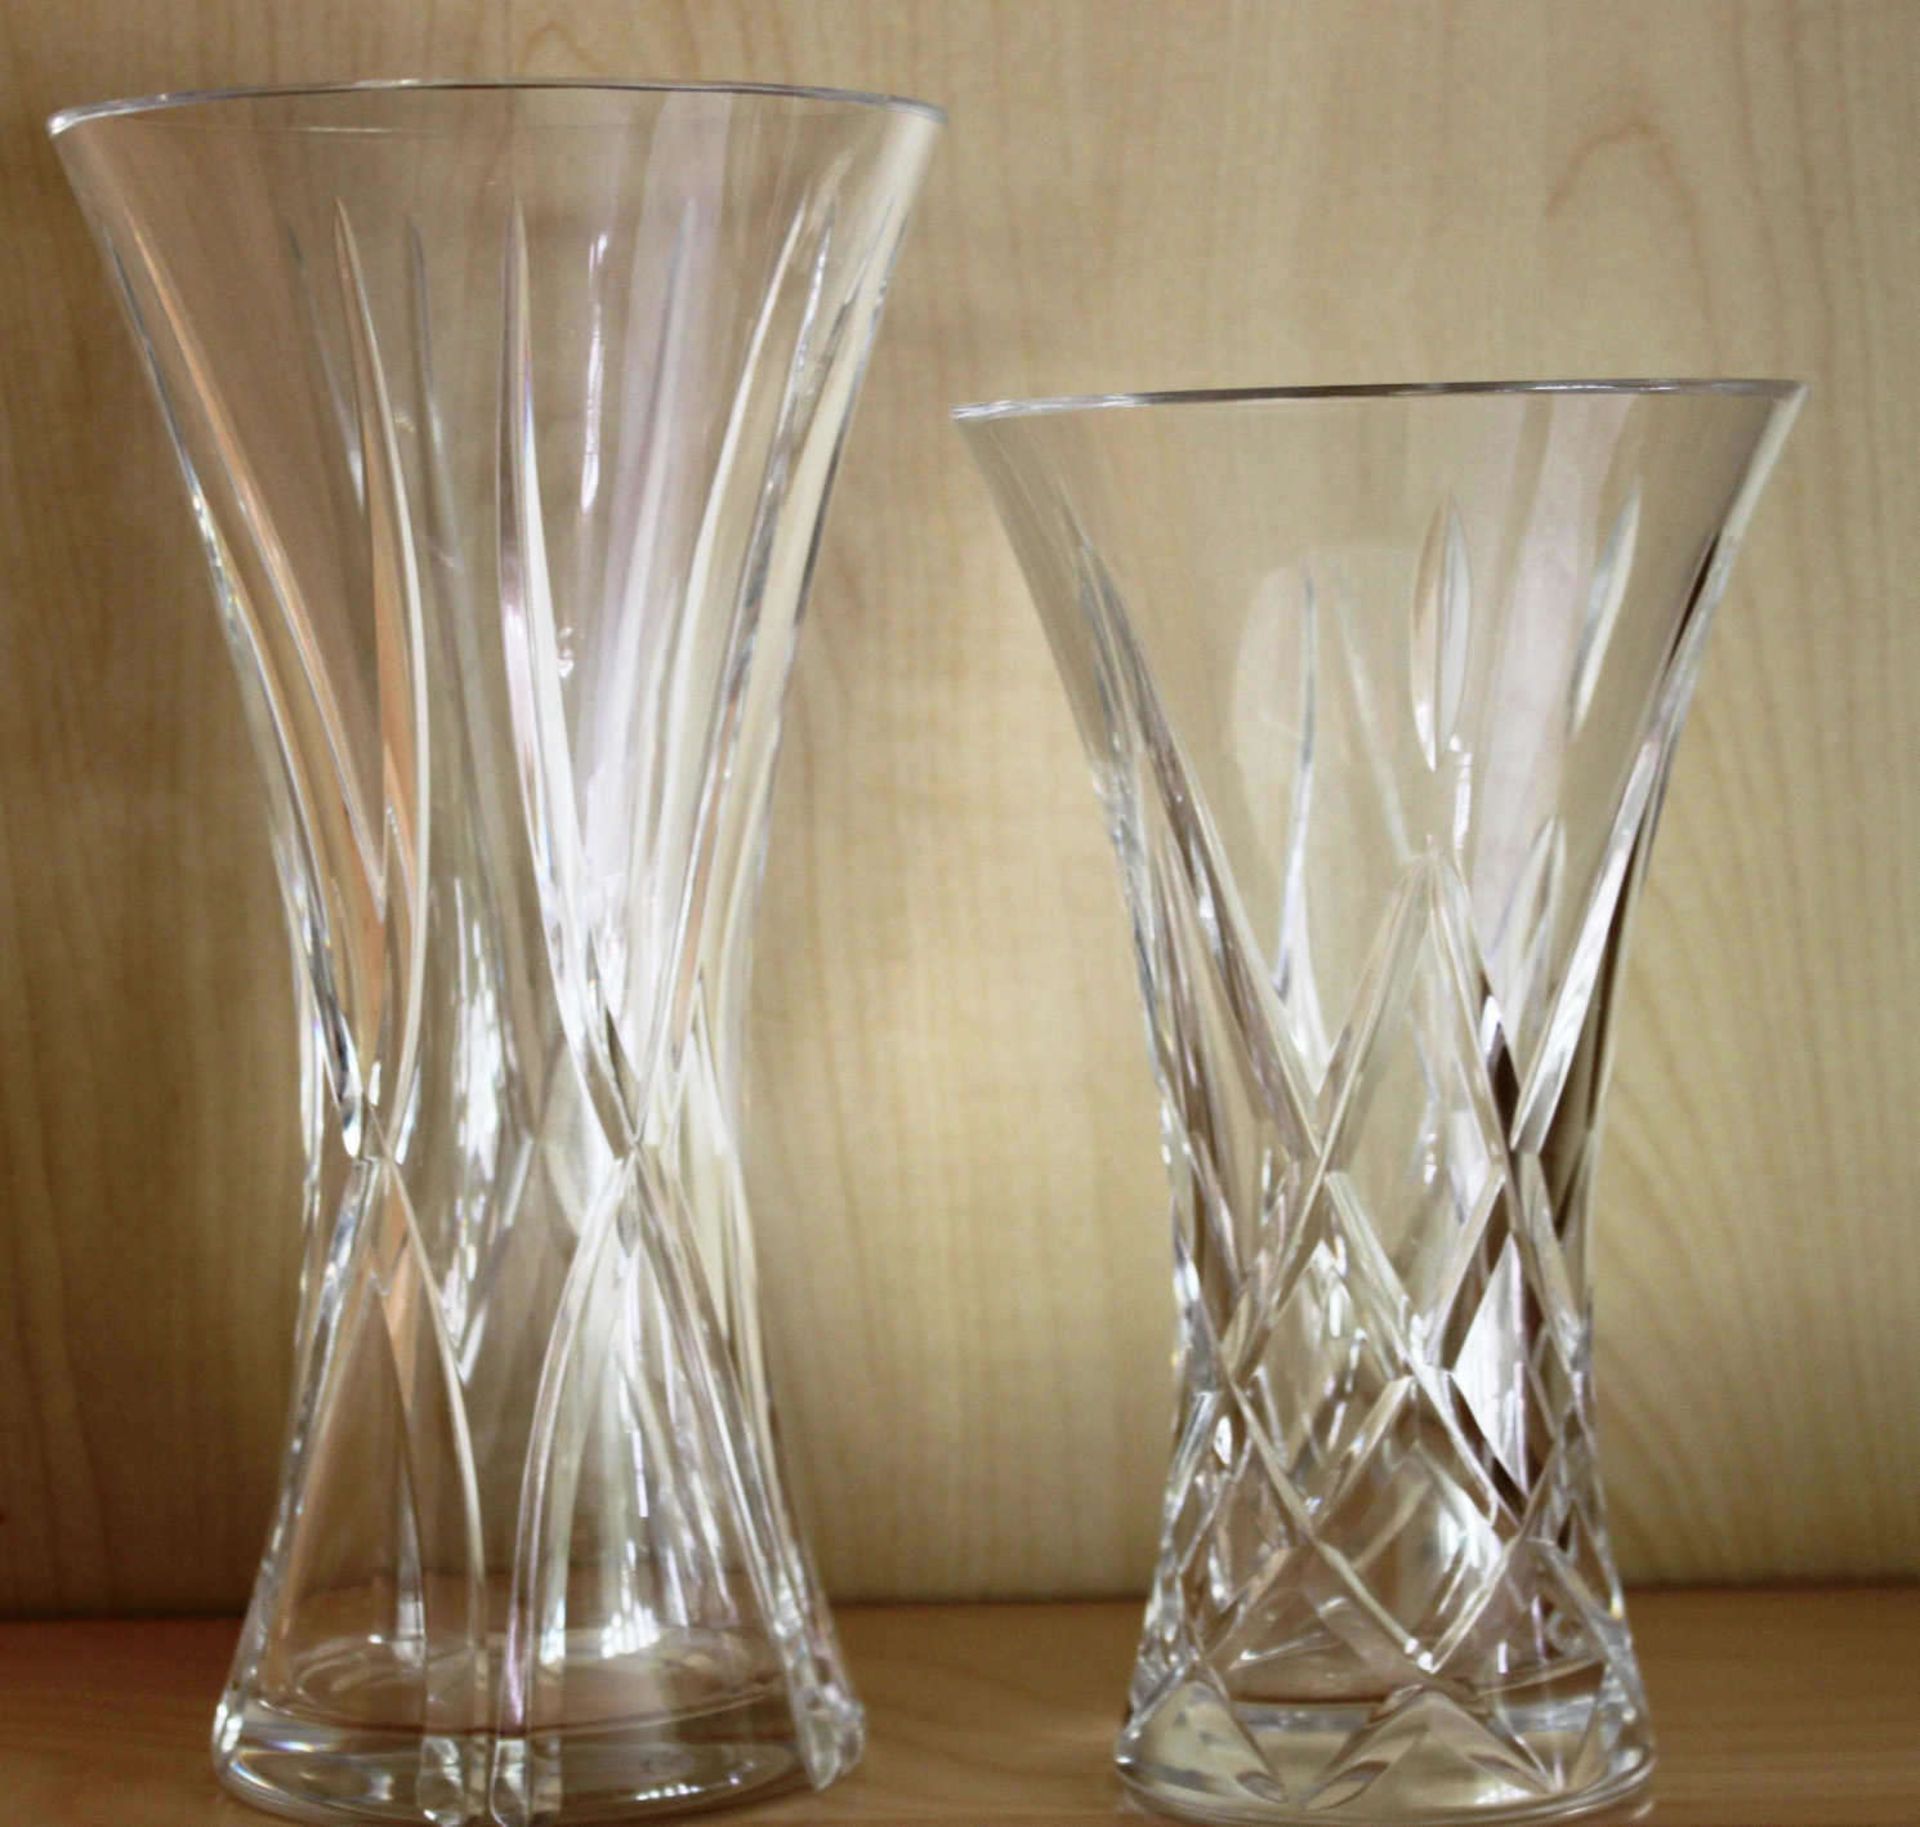 2 Kristallglasvasen, 1x Höhe ca. 20 cm, 1x Höhe ca. 23,5 cm. Guter Zustand.2 crystal glass vases, 1x